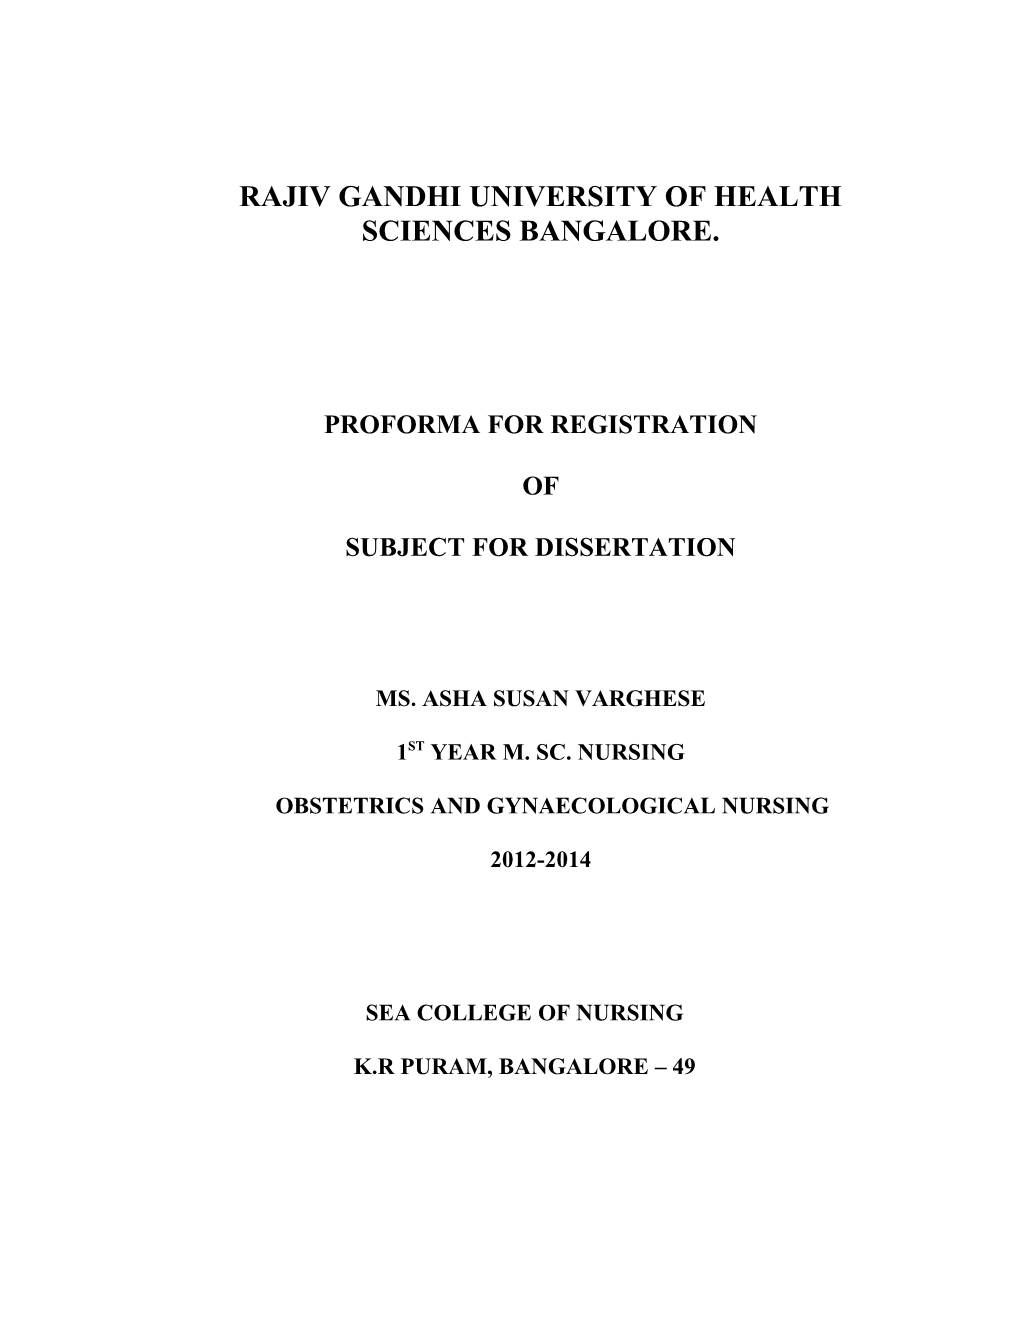 Rajiv Gandhi University of Health Sciences Bangalore s2